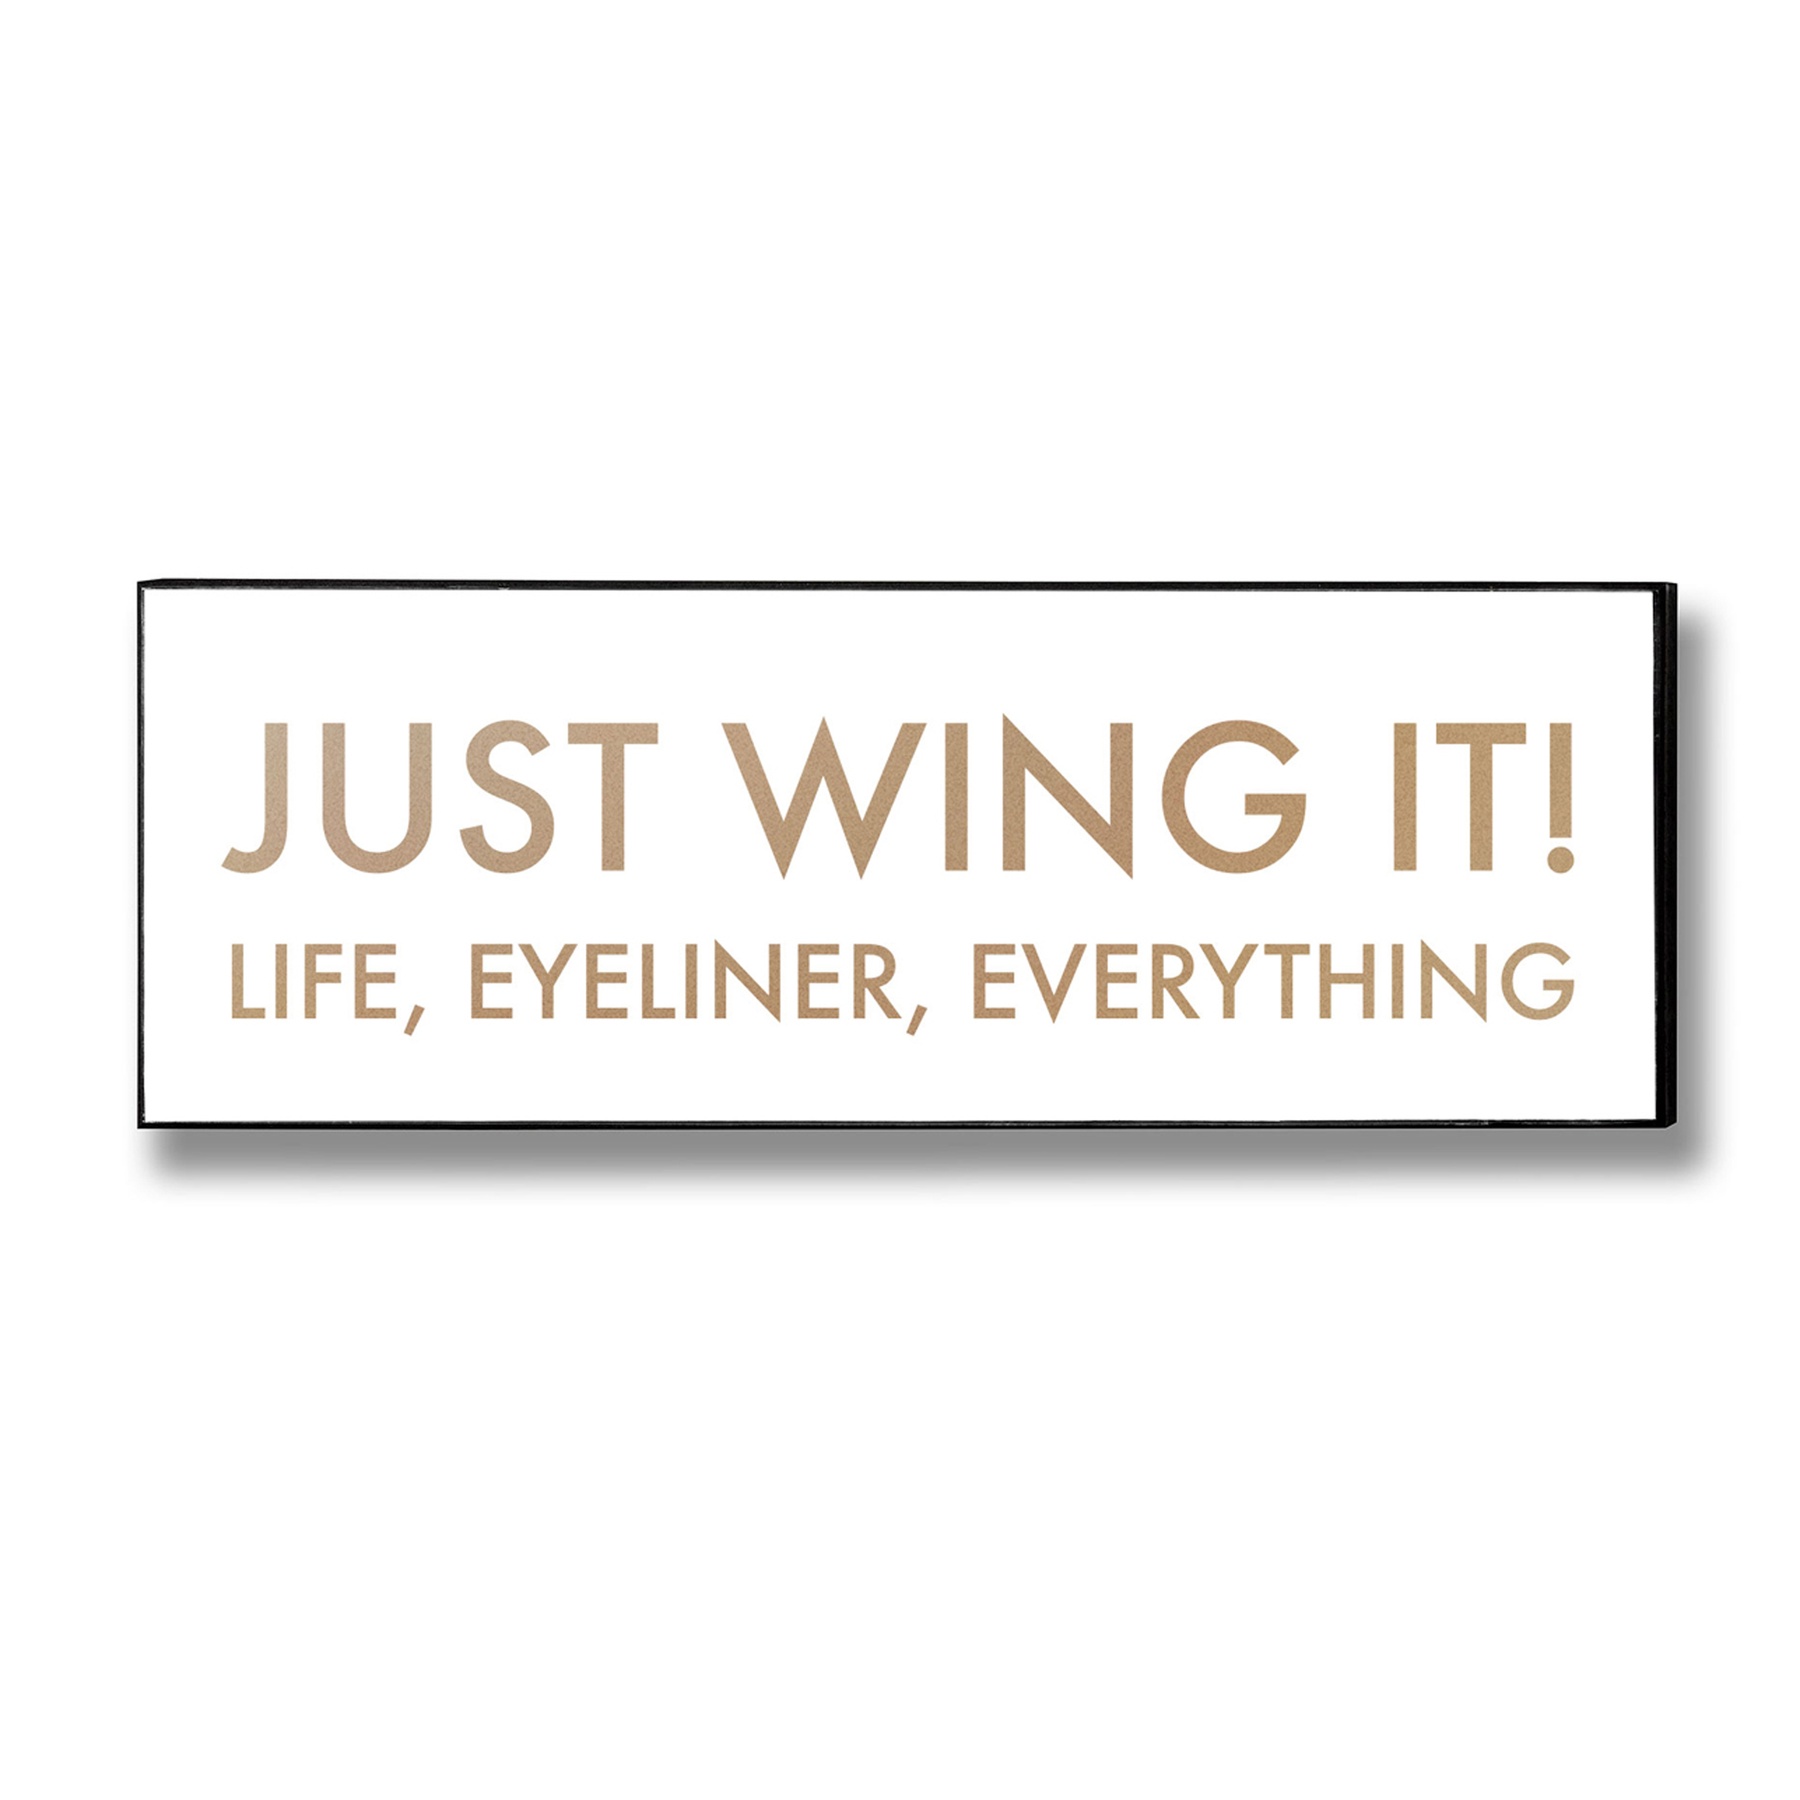 Just Wing It Gold Foil Plaque - Image 1